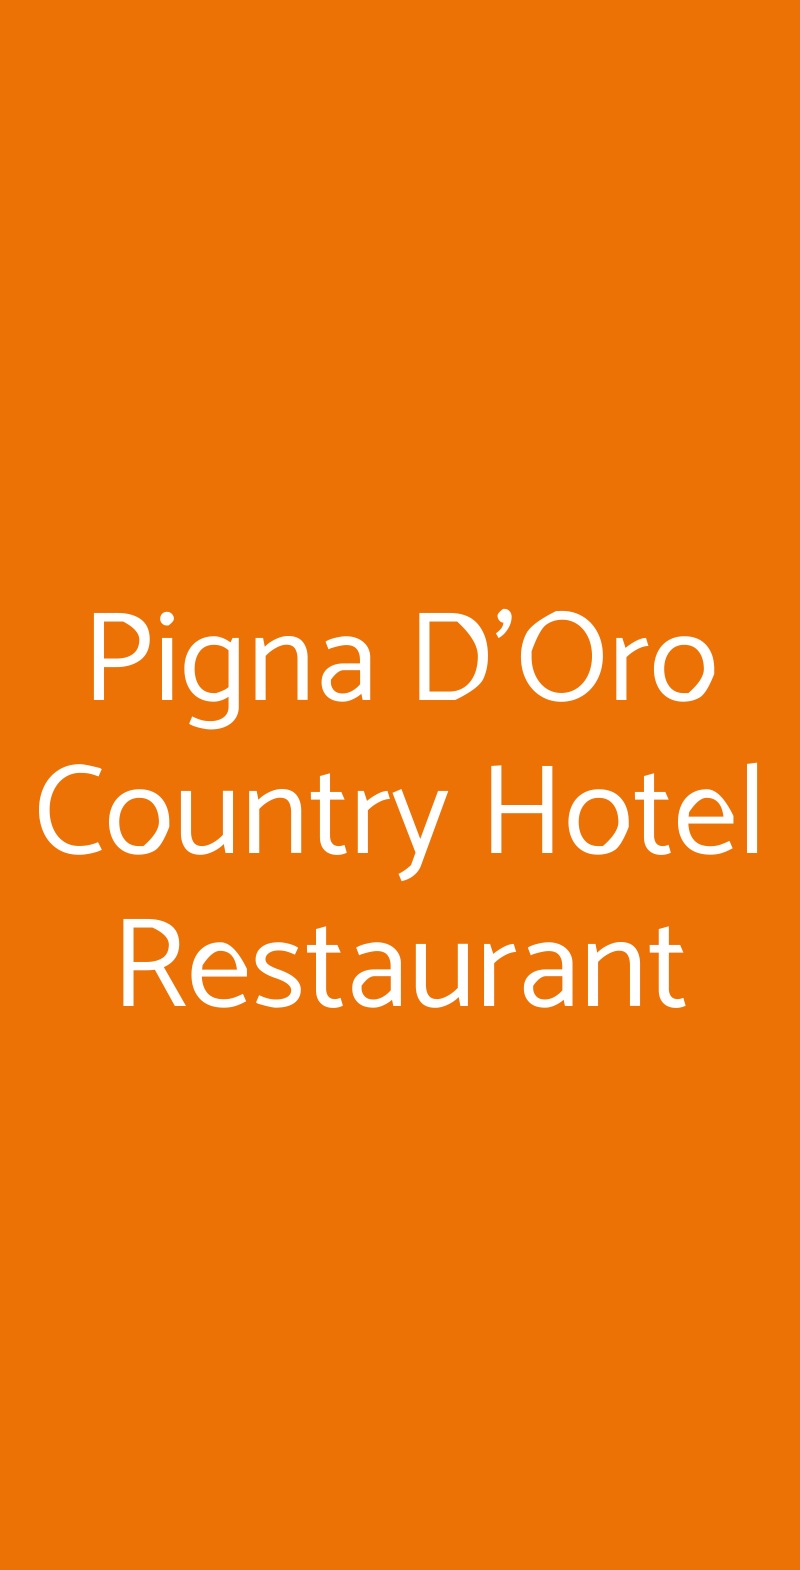 Pigna D'Oro Country Hotel Restaurant Santo Stefano Quisquina menù 1 pagina